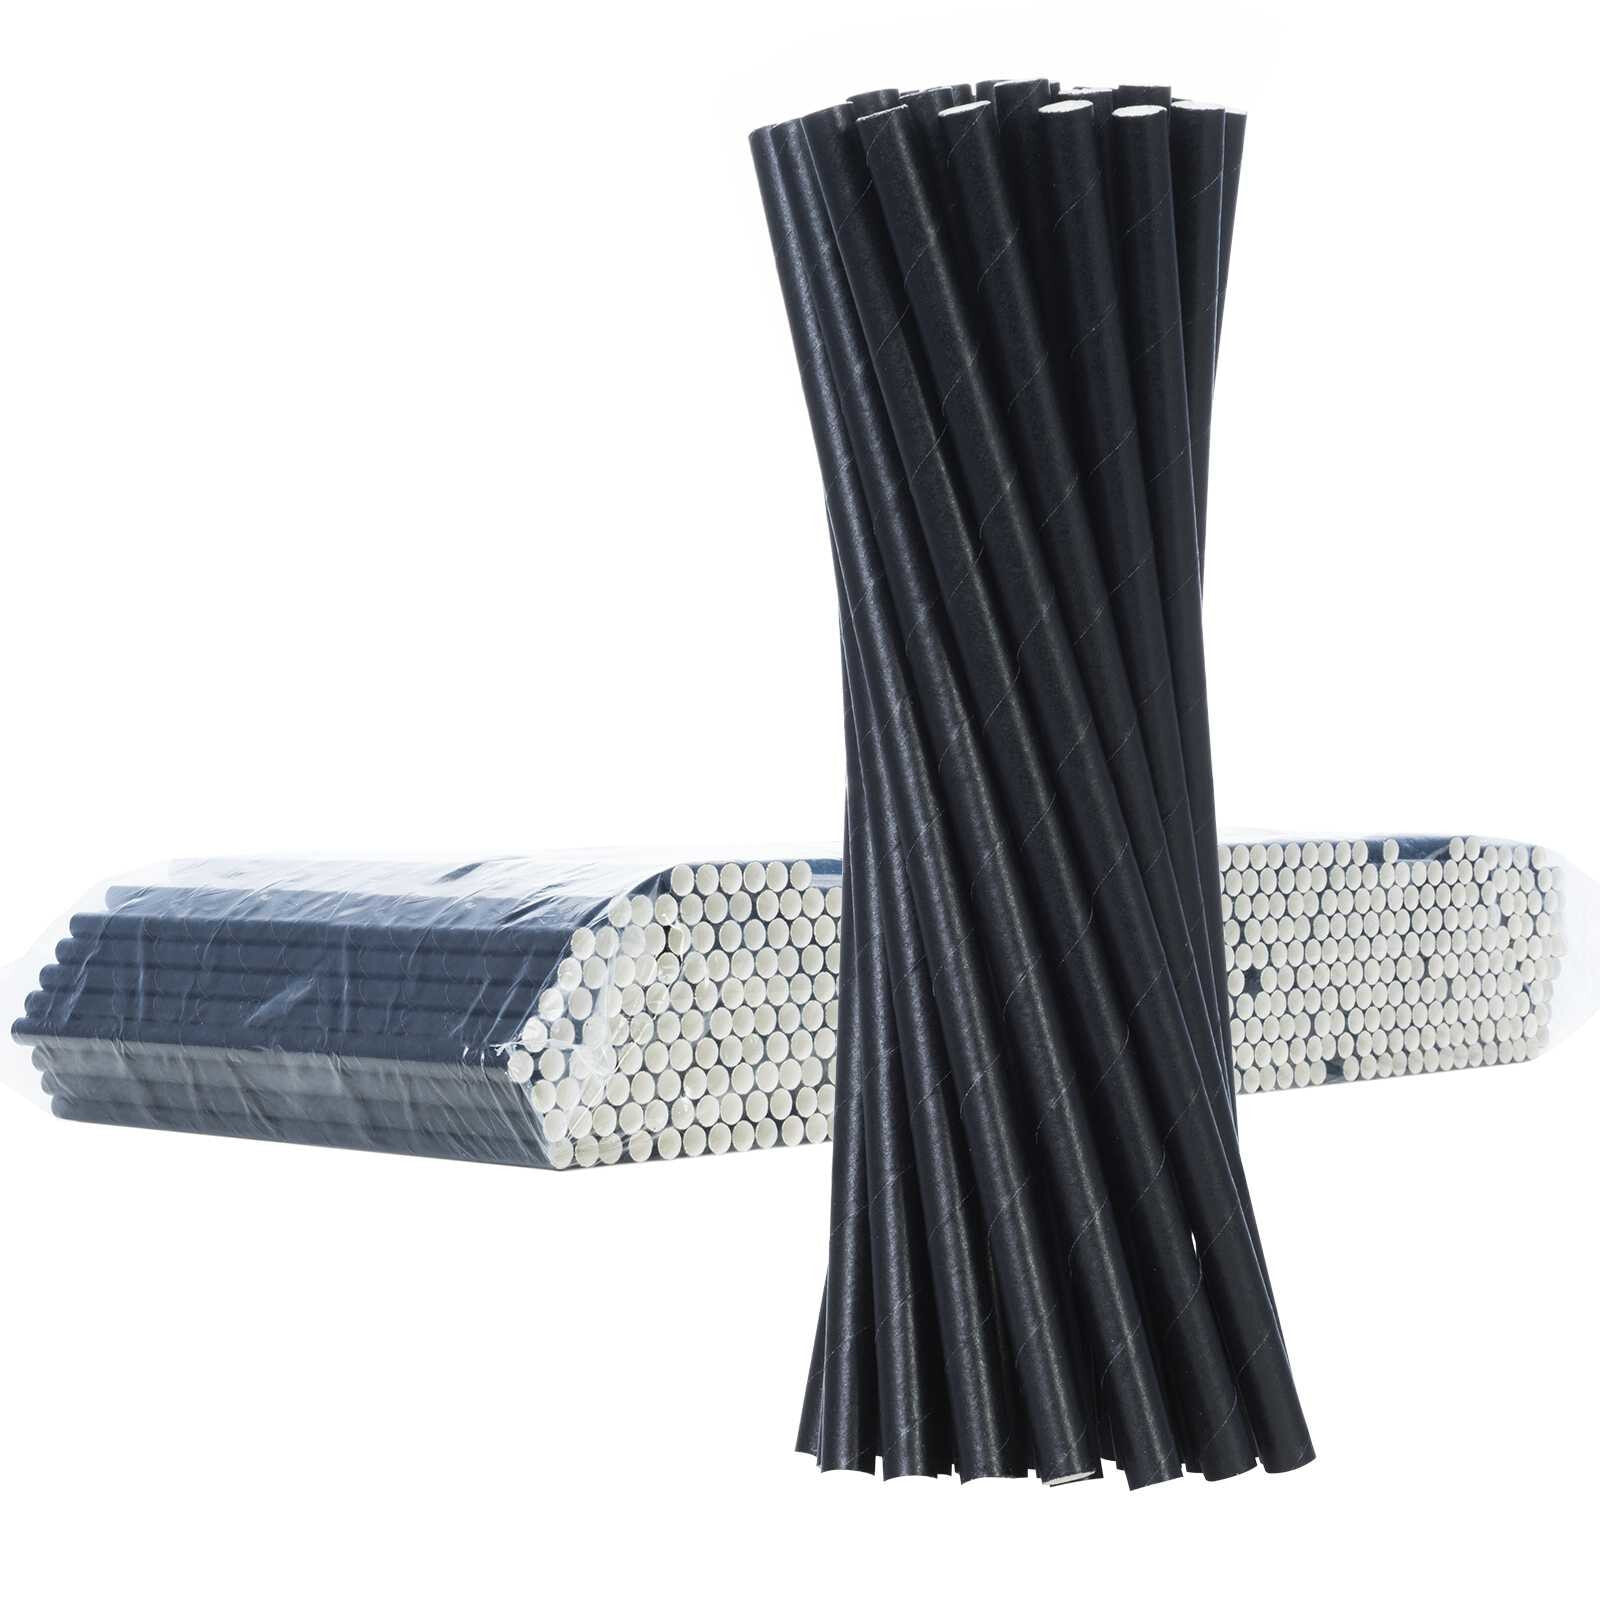 Paper straws BIO ecological PAPER STRAWS 6 / 205mm - black 500pcs.